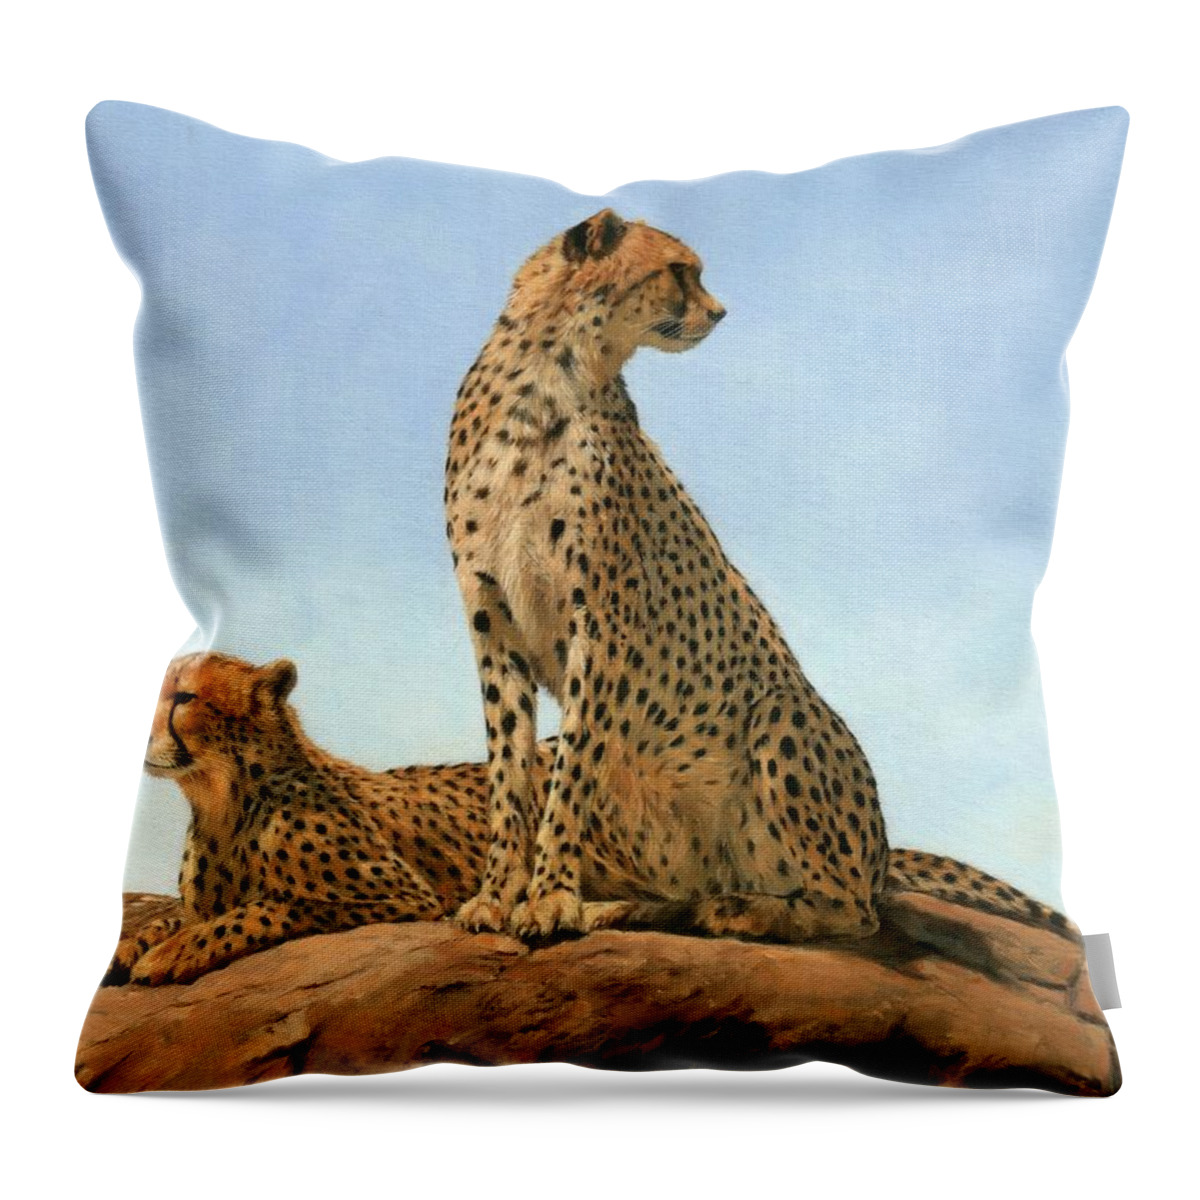 Cheetah Throw Pillow featuring the painting Cheetahs by David Stribbling